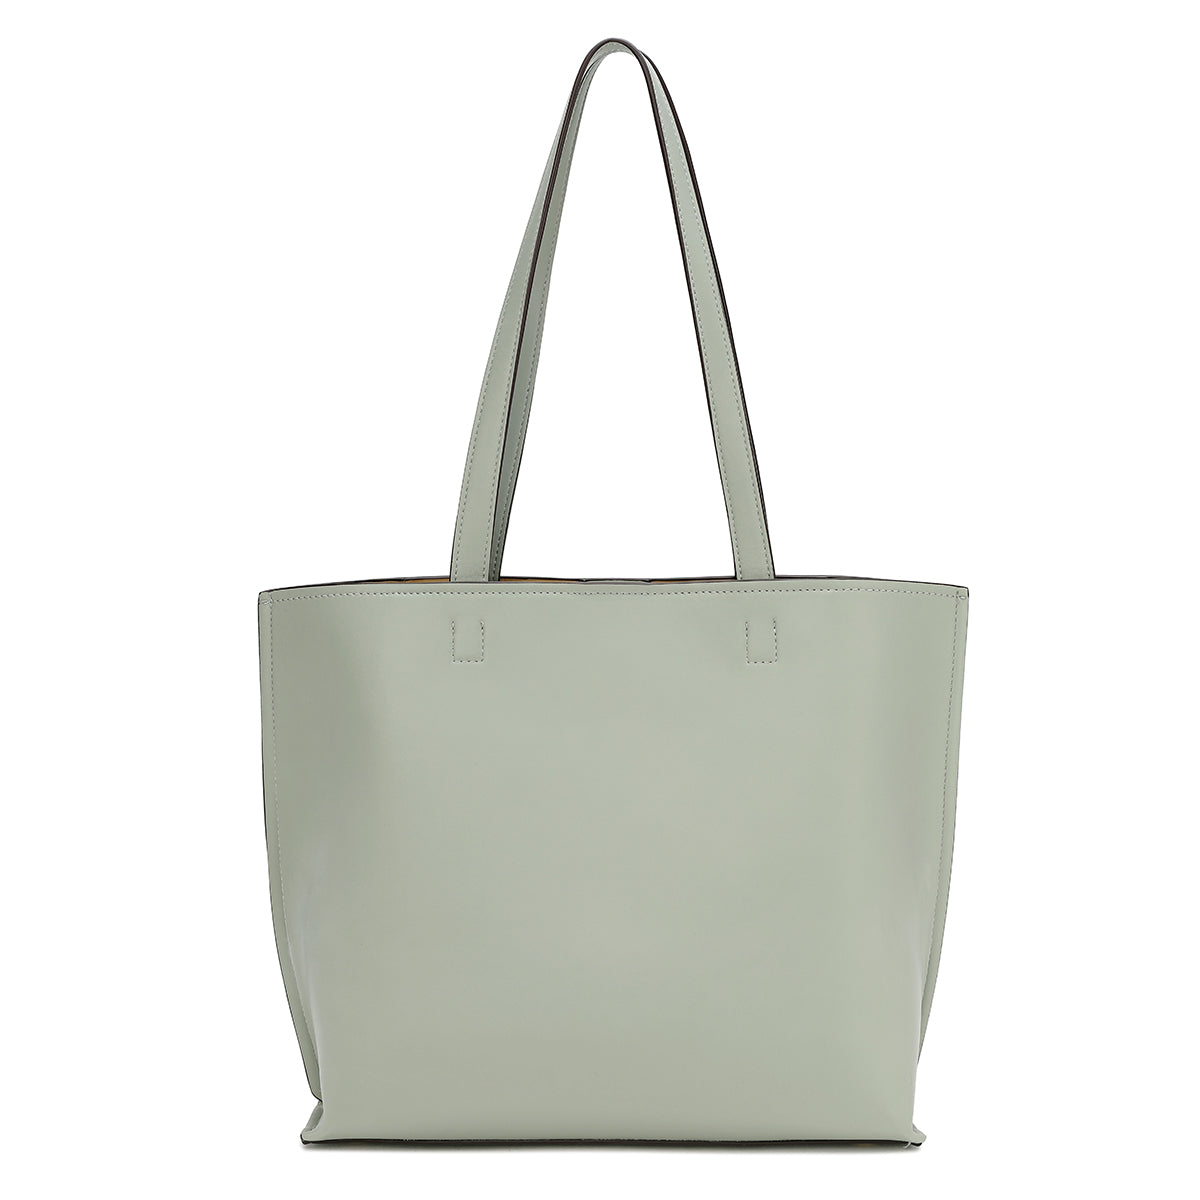 A simple, classic, spacious handbag in several colours